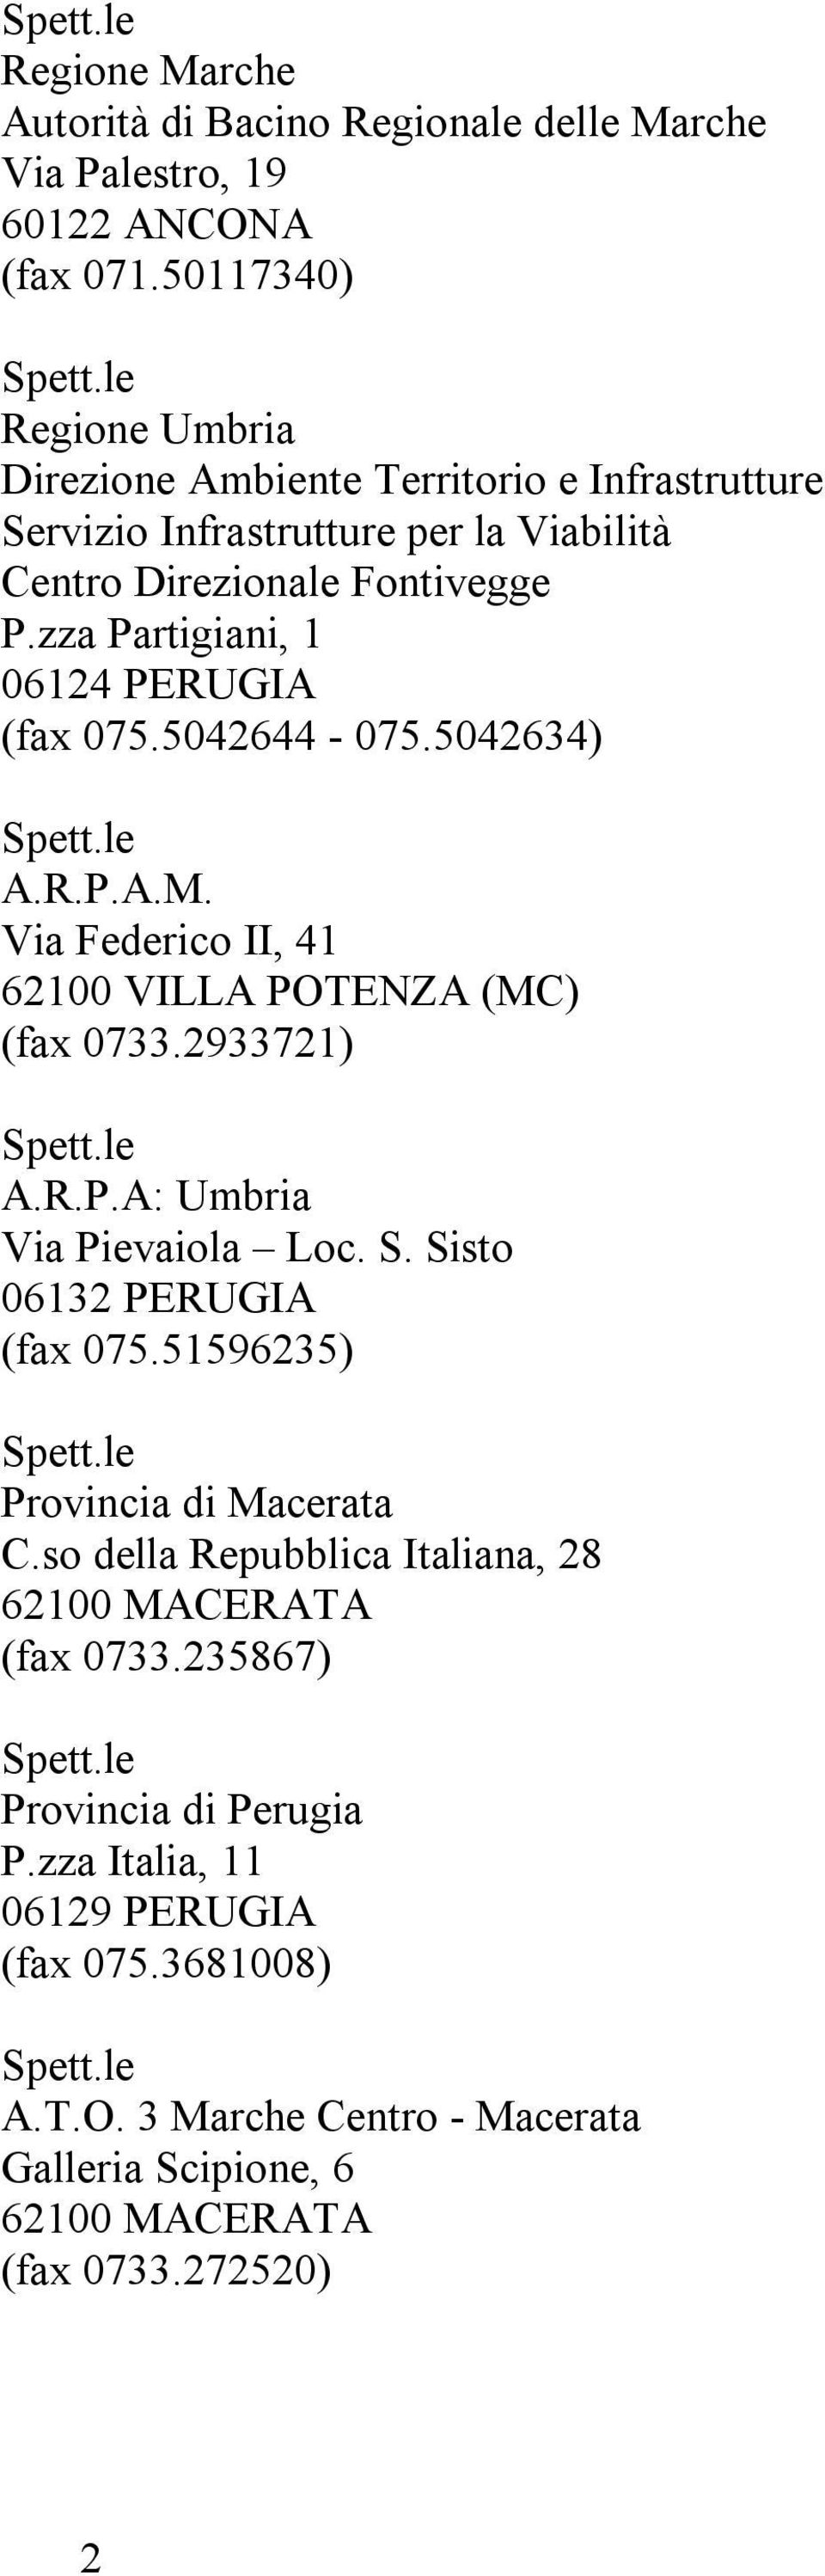 zza Partigiani, 1 06124 PERUGIA (fax 075.5042644-075.5042634) A.R.P.A.M. Via Federico II, 41 62100 VILLA POTENZA (MC) (fax 0733.2933721) A.R.P.A: Umbria Via Pievaiola Loc.